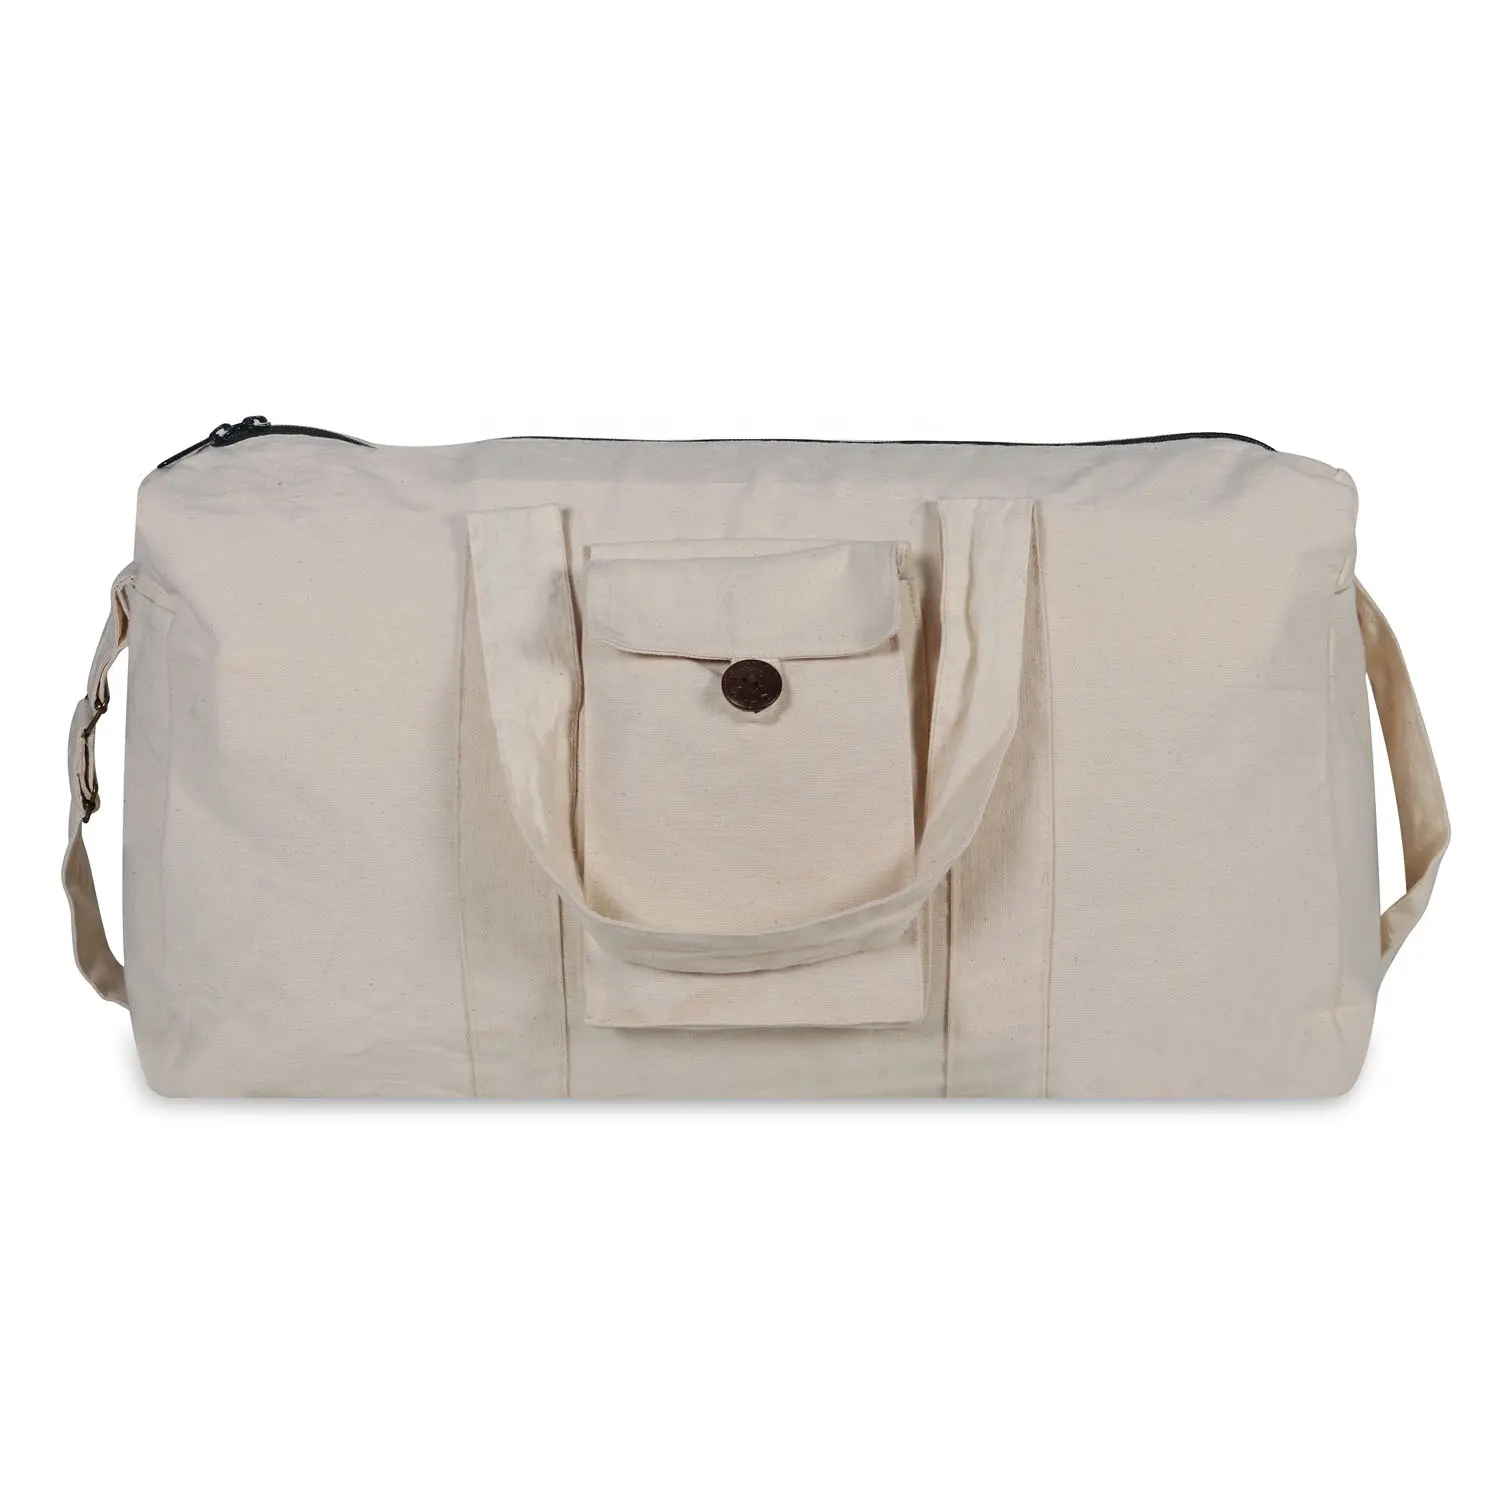 Hot Sale Custom Made Large Capacity Cotton Canvas Duffel Bag Vegan Handmade Luggage and Gym Travel Bag Contender